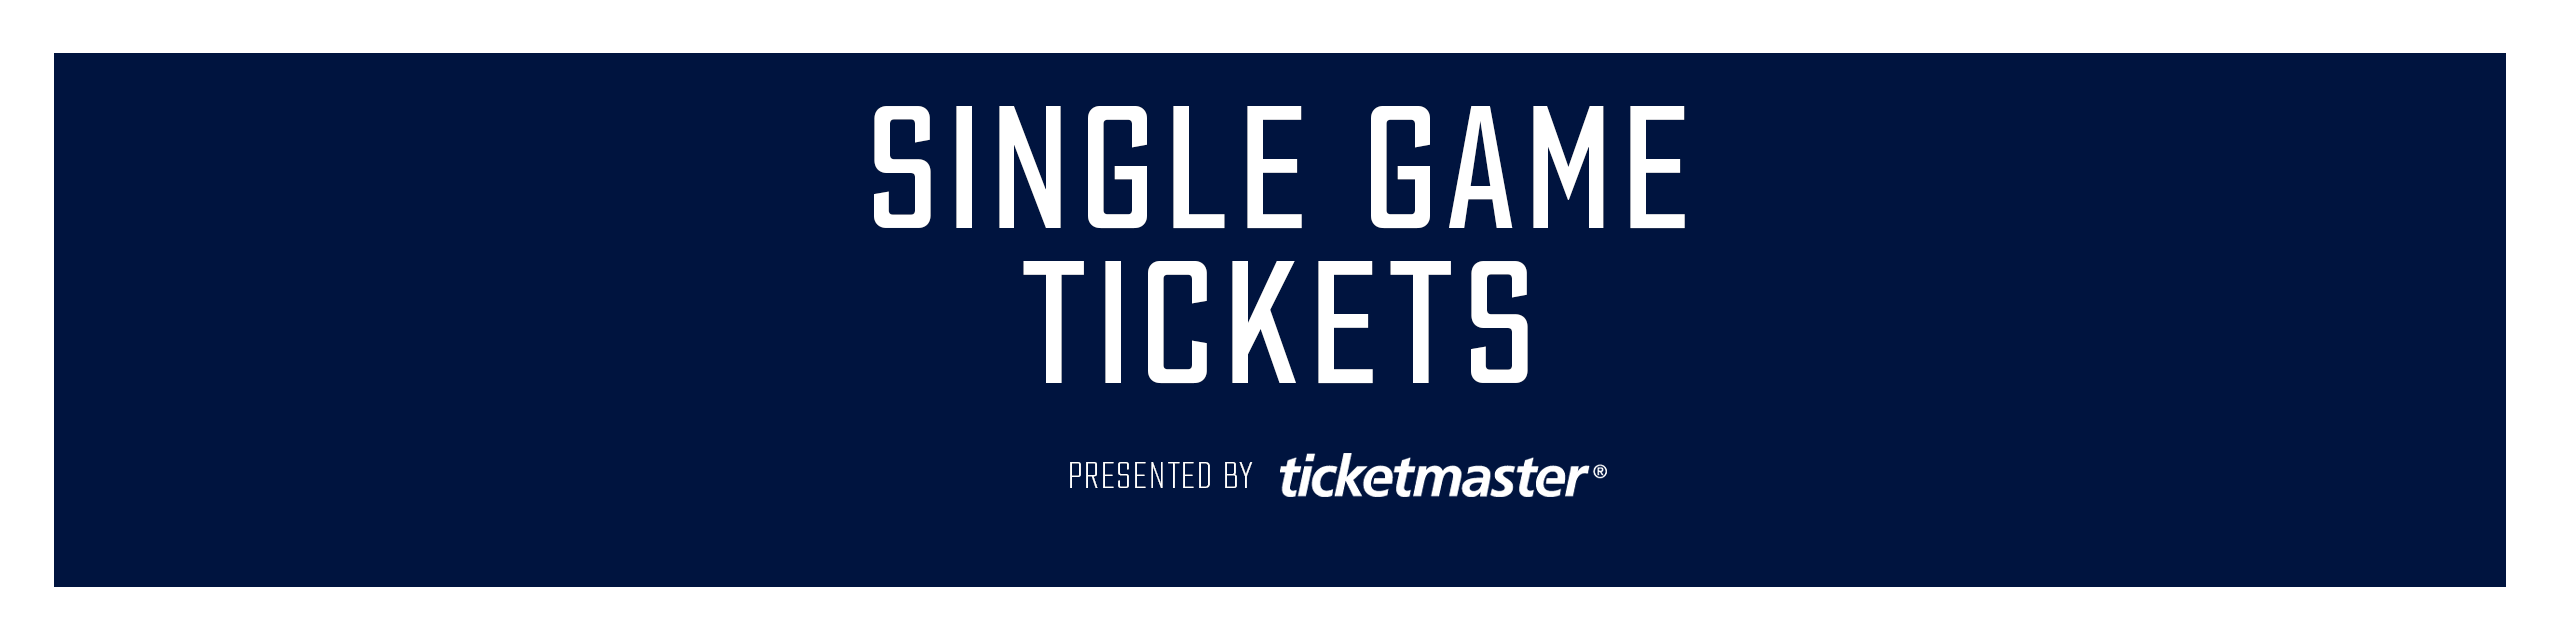 houston texans single game tickets